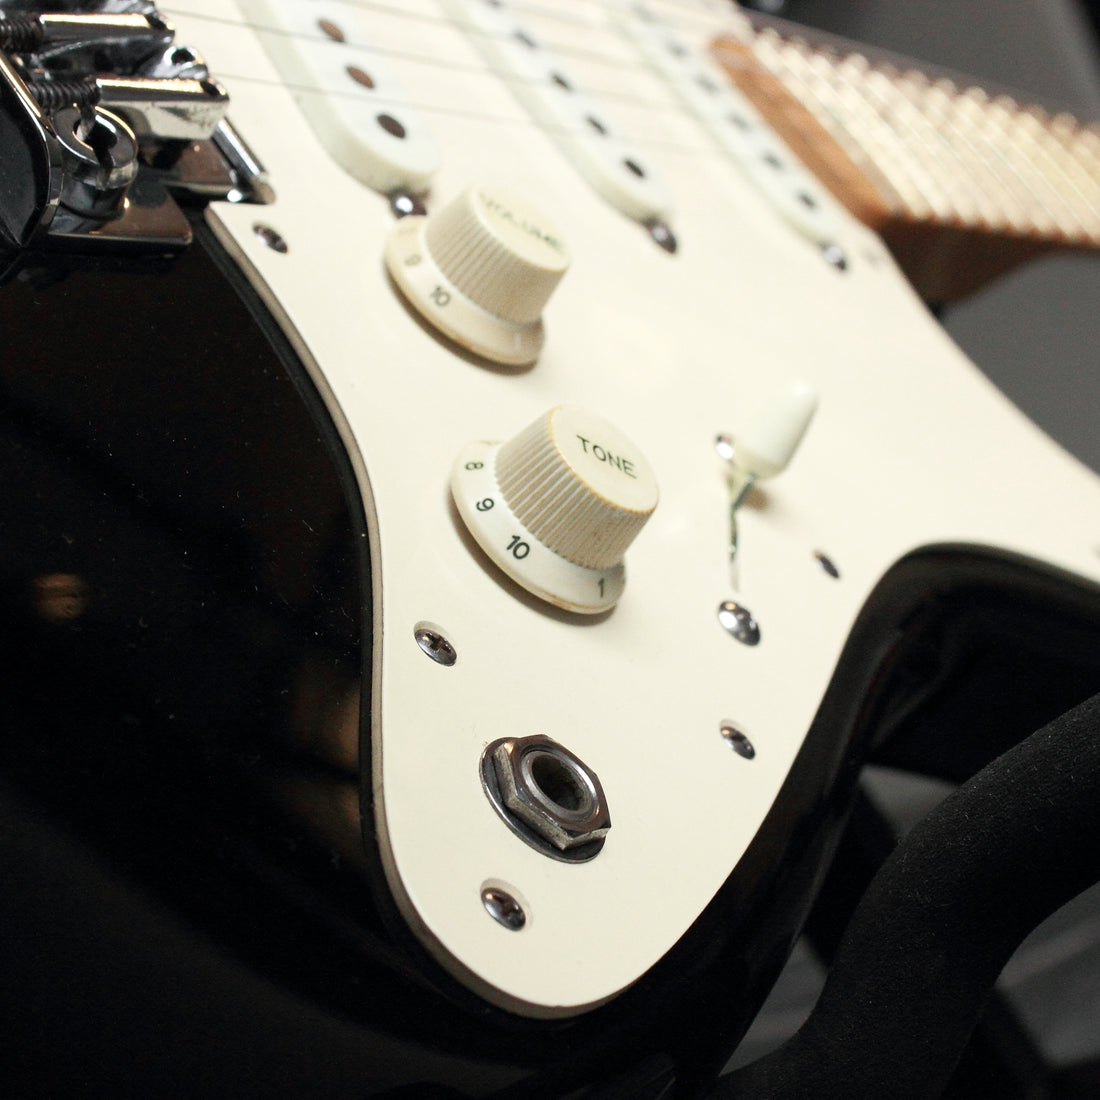 Fender Standard Stratocaster Black 1983